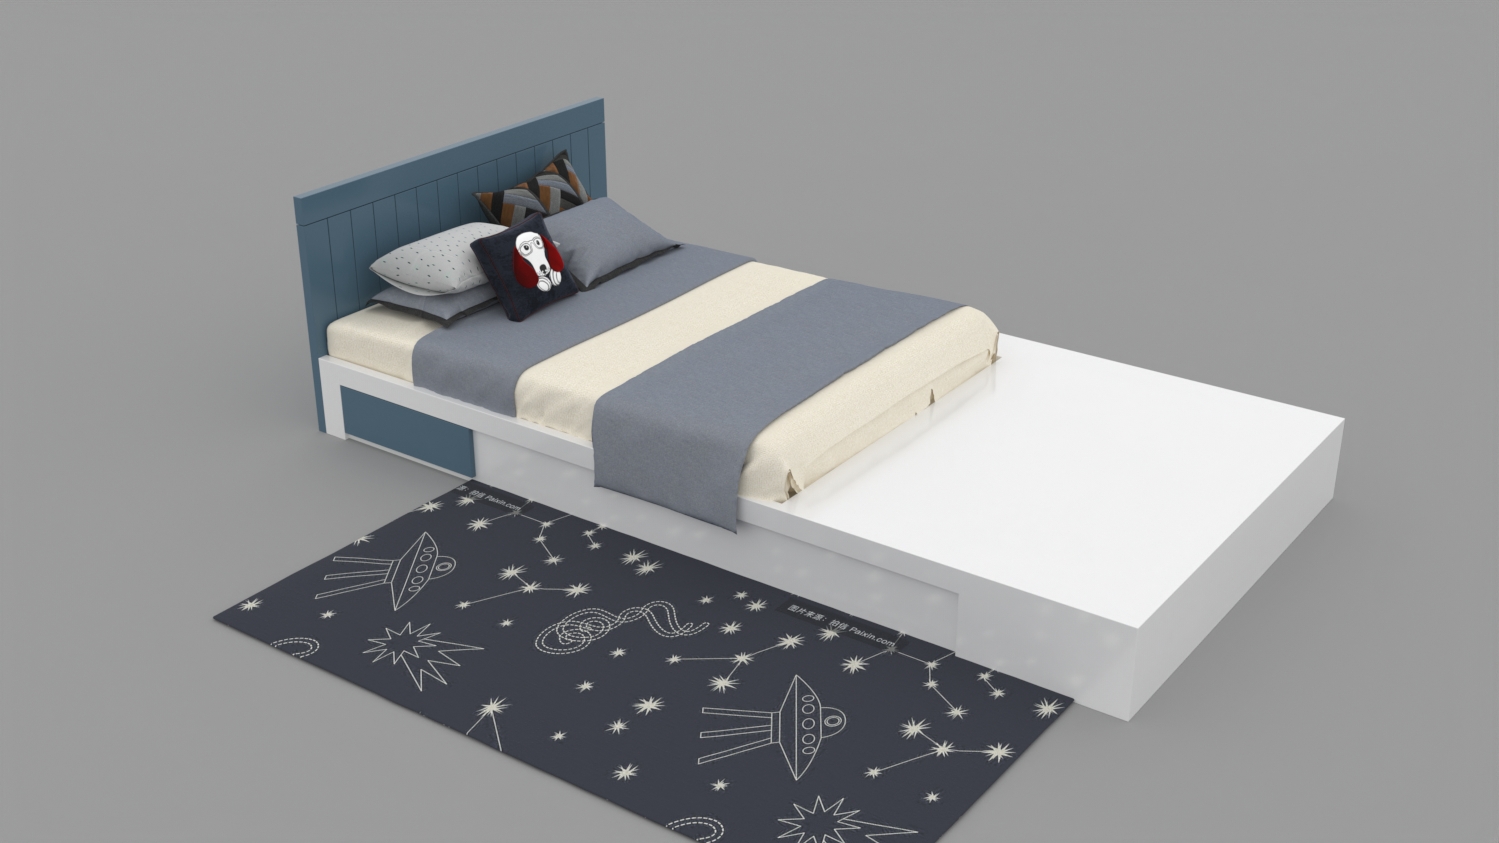 2939. Free 3D Bed Model Download